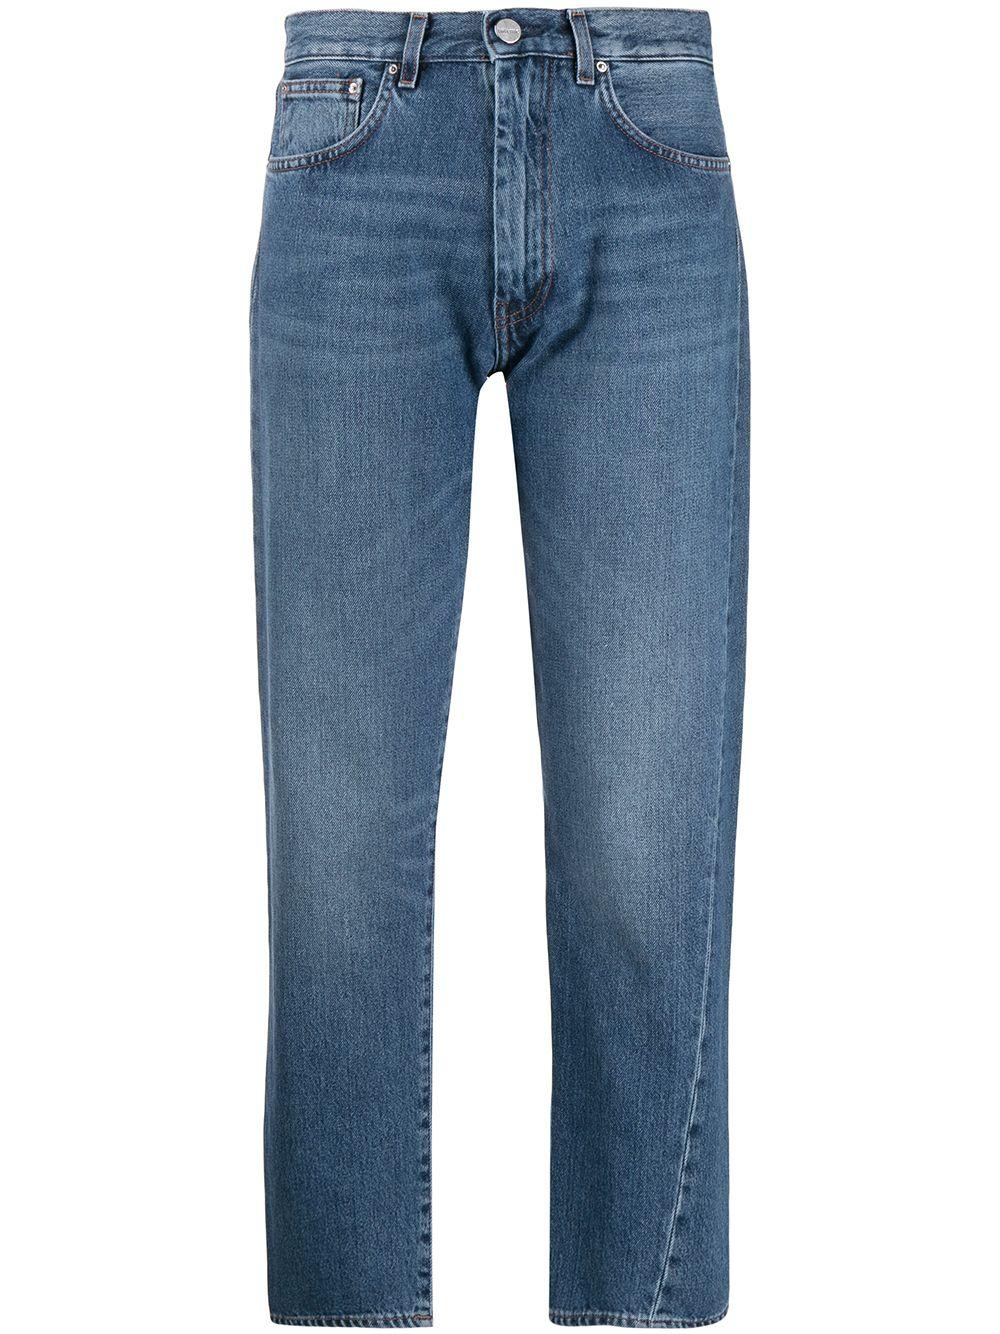 Totême Denim Cropped Jeans in Blue - Lyst